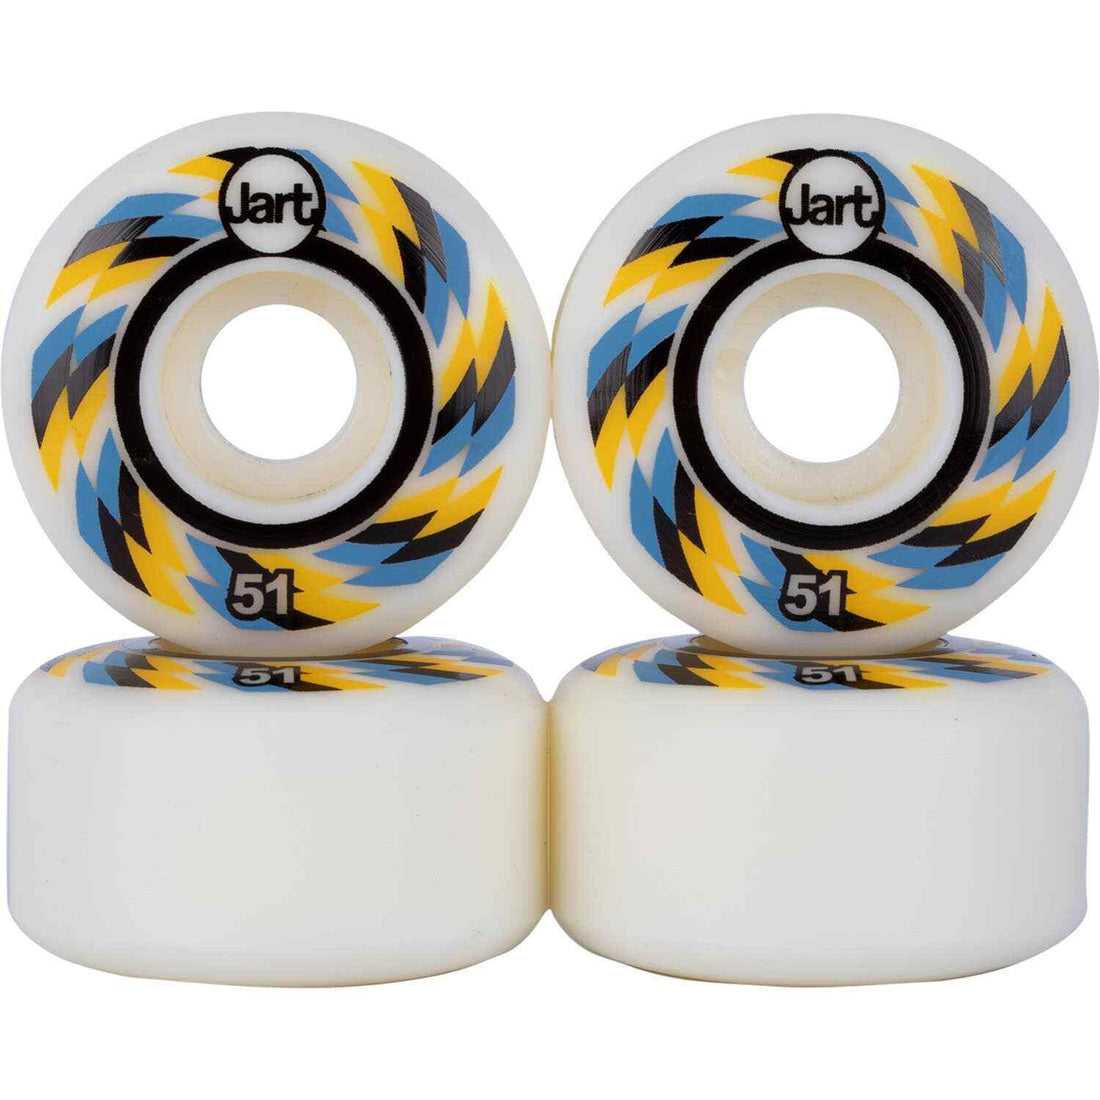 Jart Spiral Skateboard Wheels - 51mm